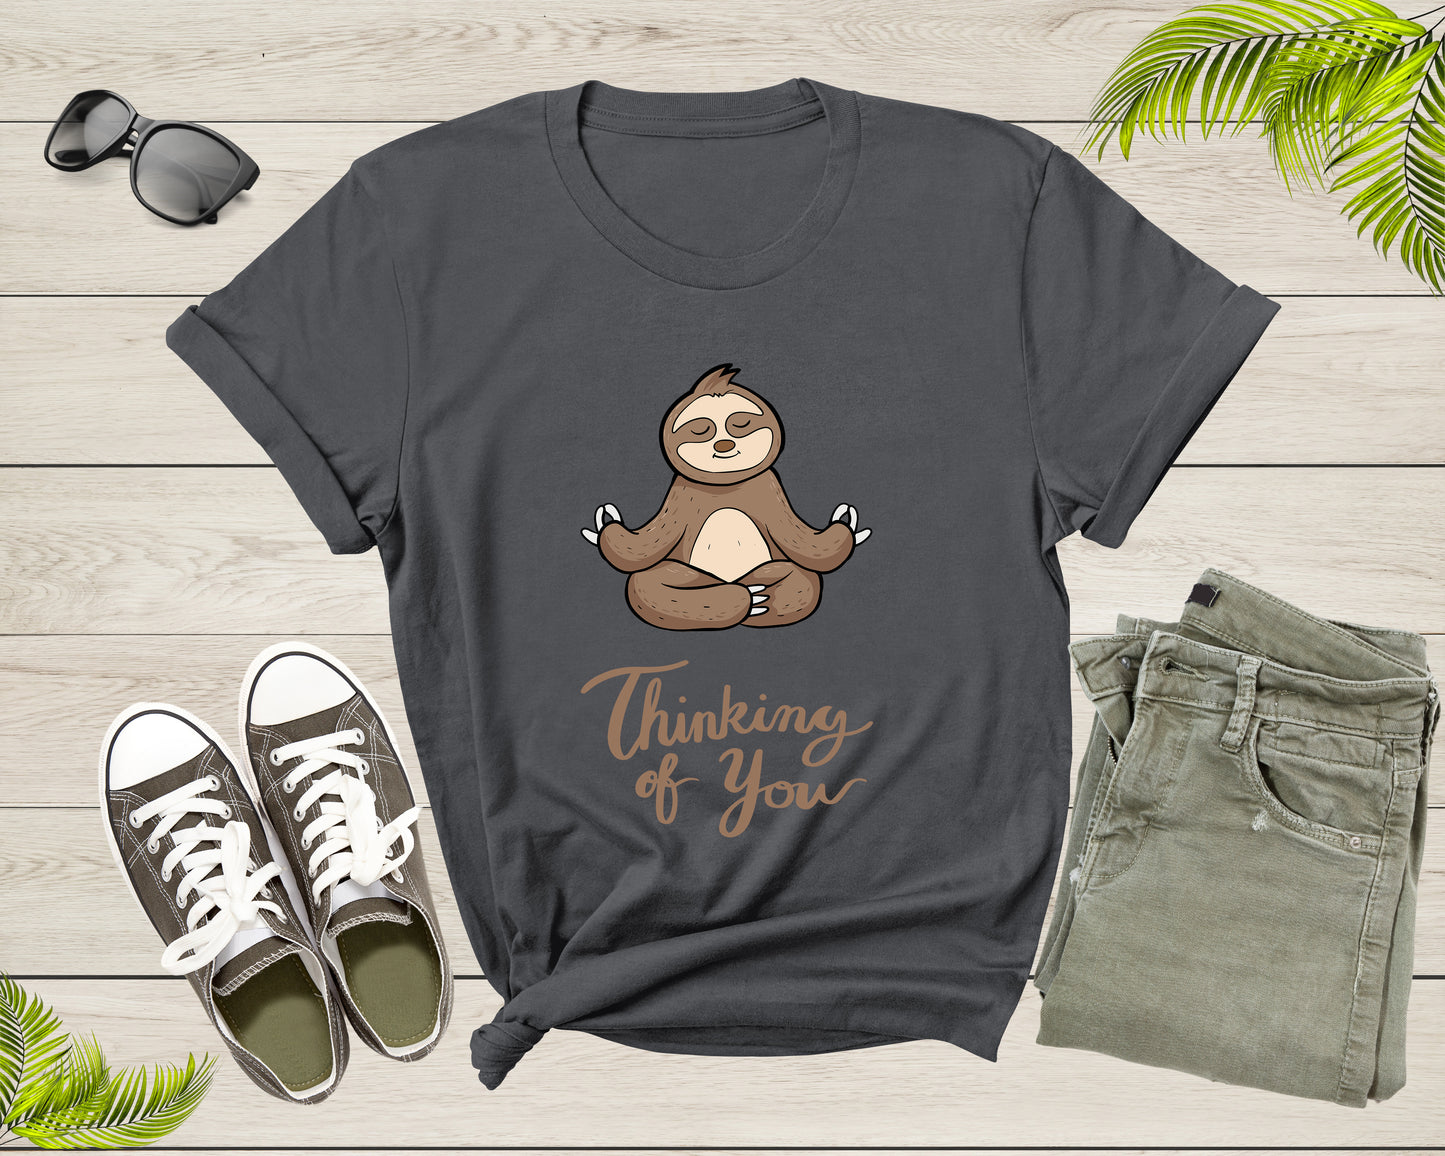 Thinking of You Sloth Yoga Meditation Animal Sit Relaxing T-Shirt Cute Cool Sloth Lover Gift T Shirt for Men Women Kids Boys Girls Tshirt